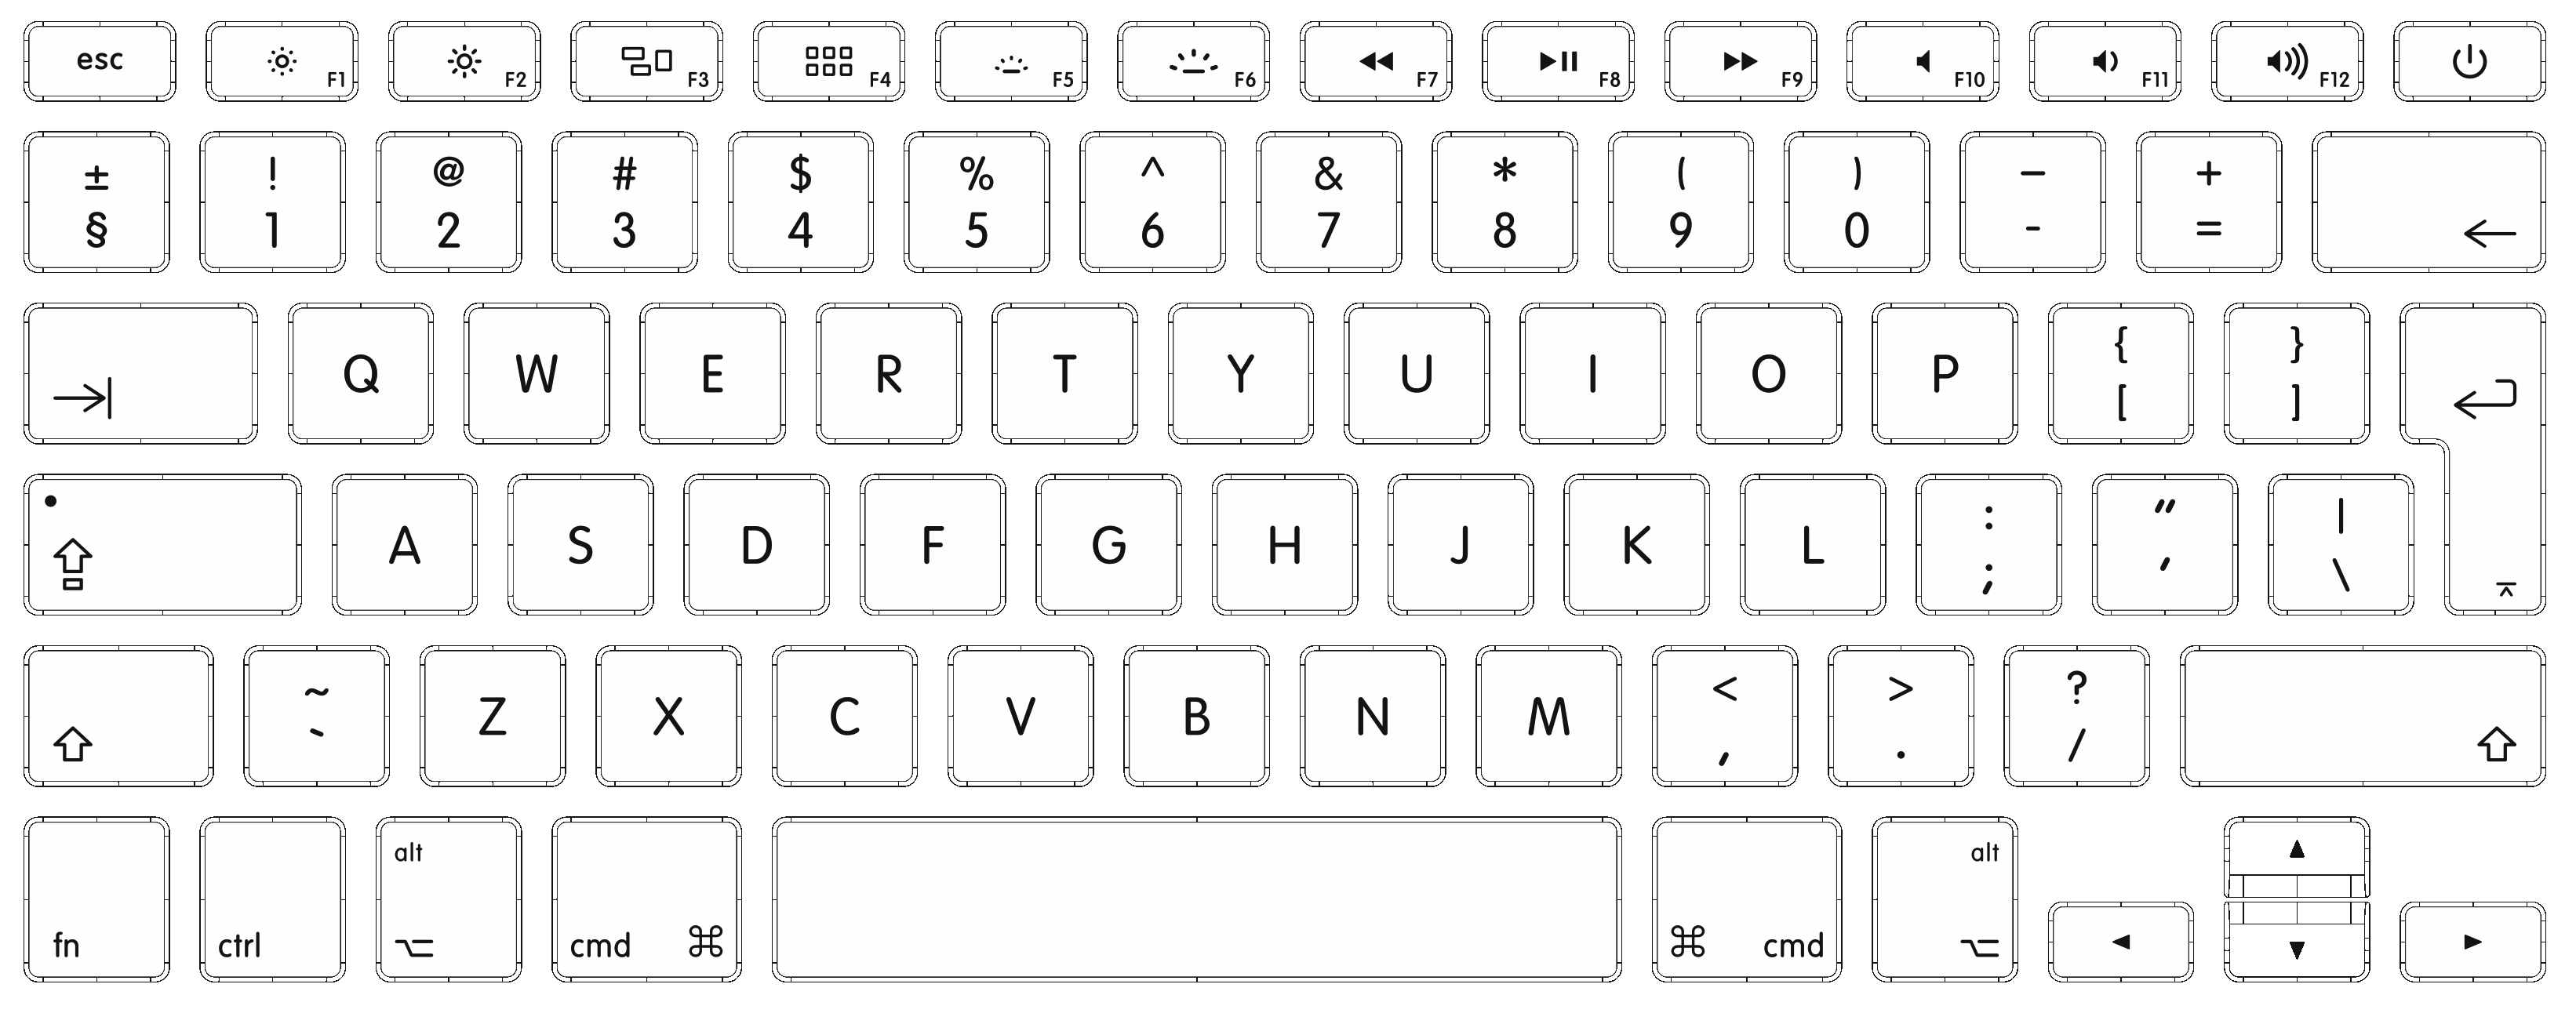 Virtual Thai Keyboard For Mac